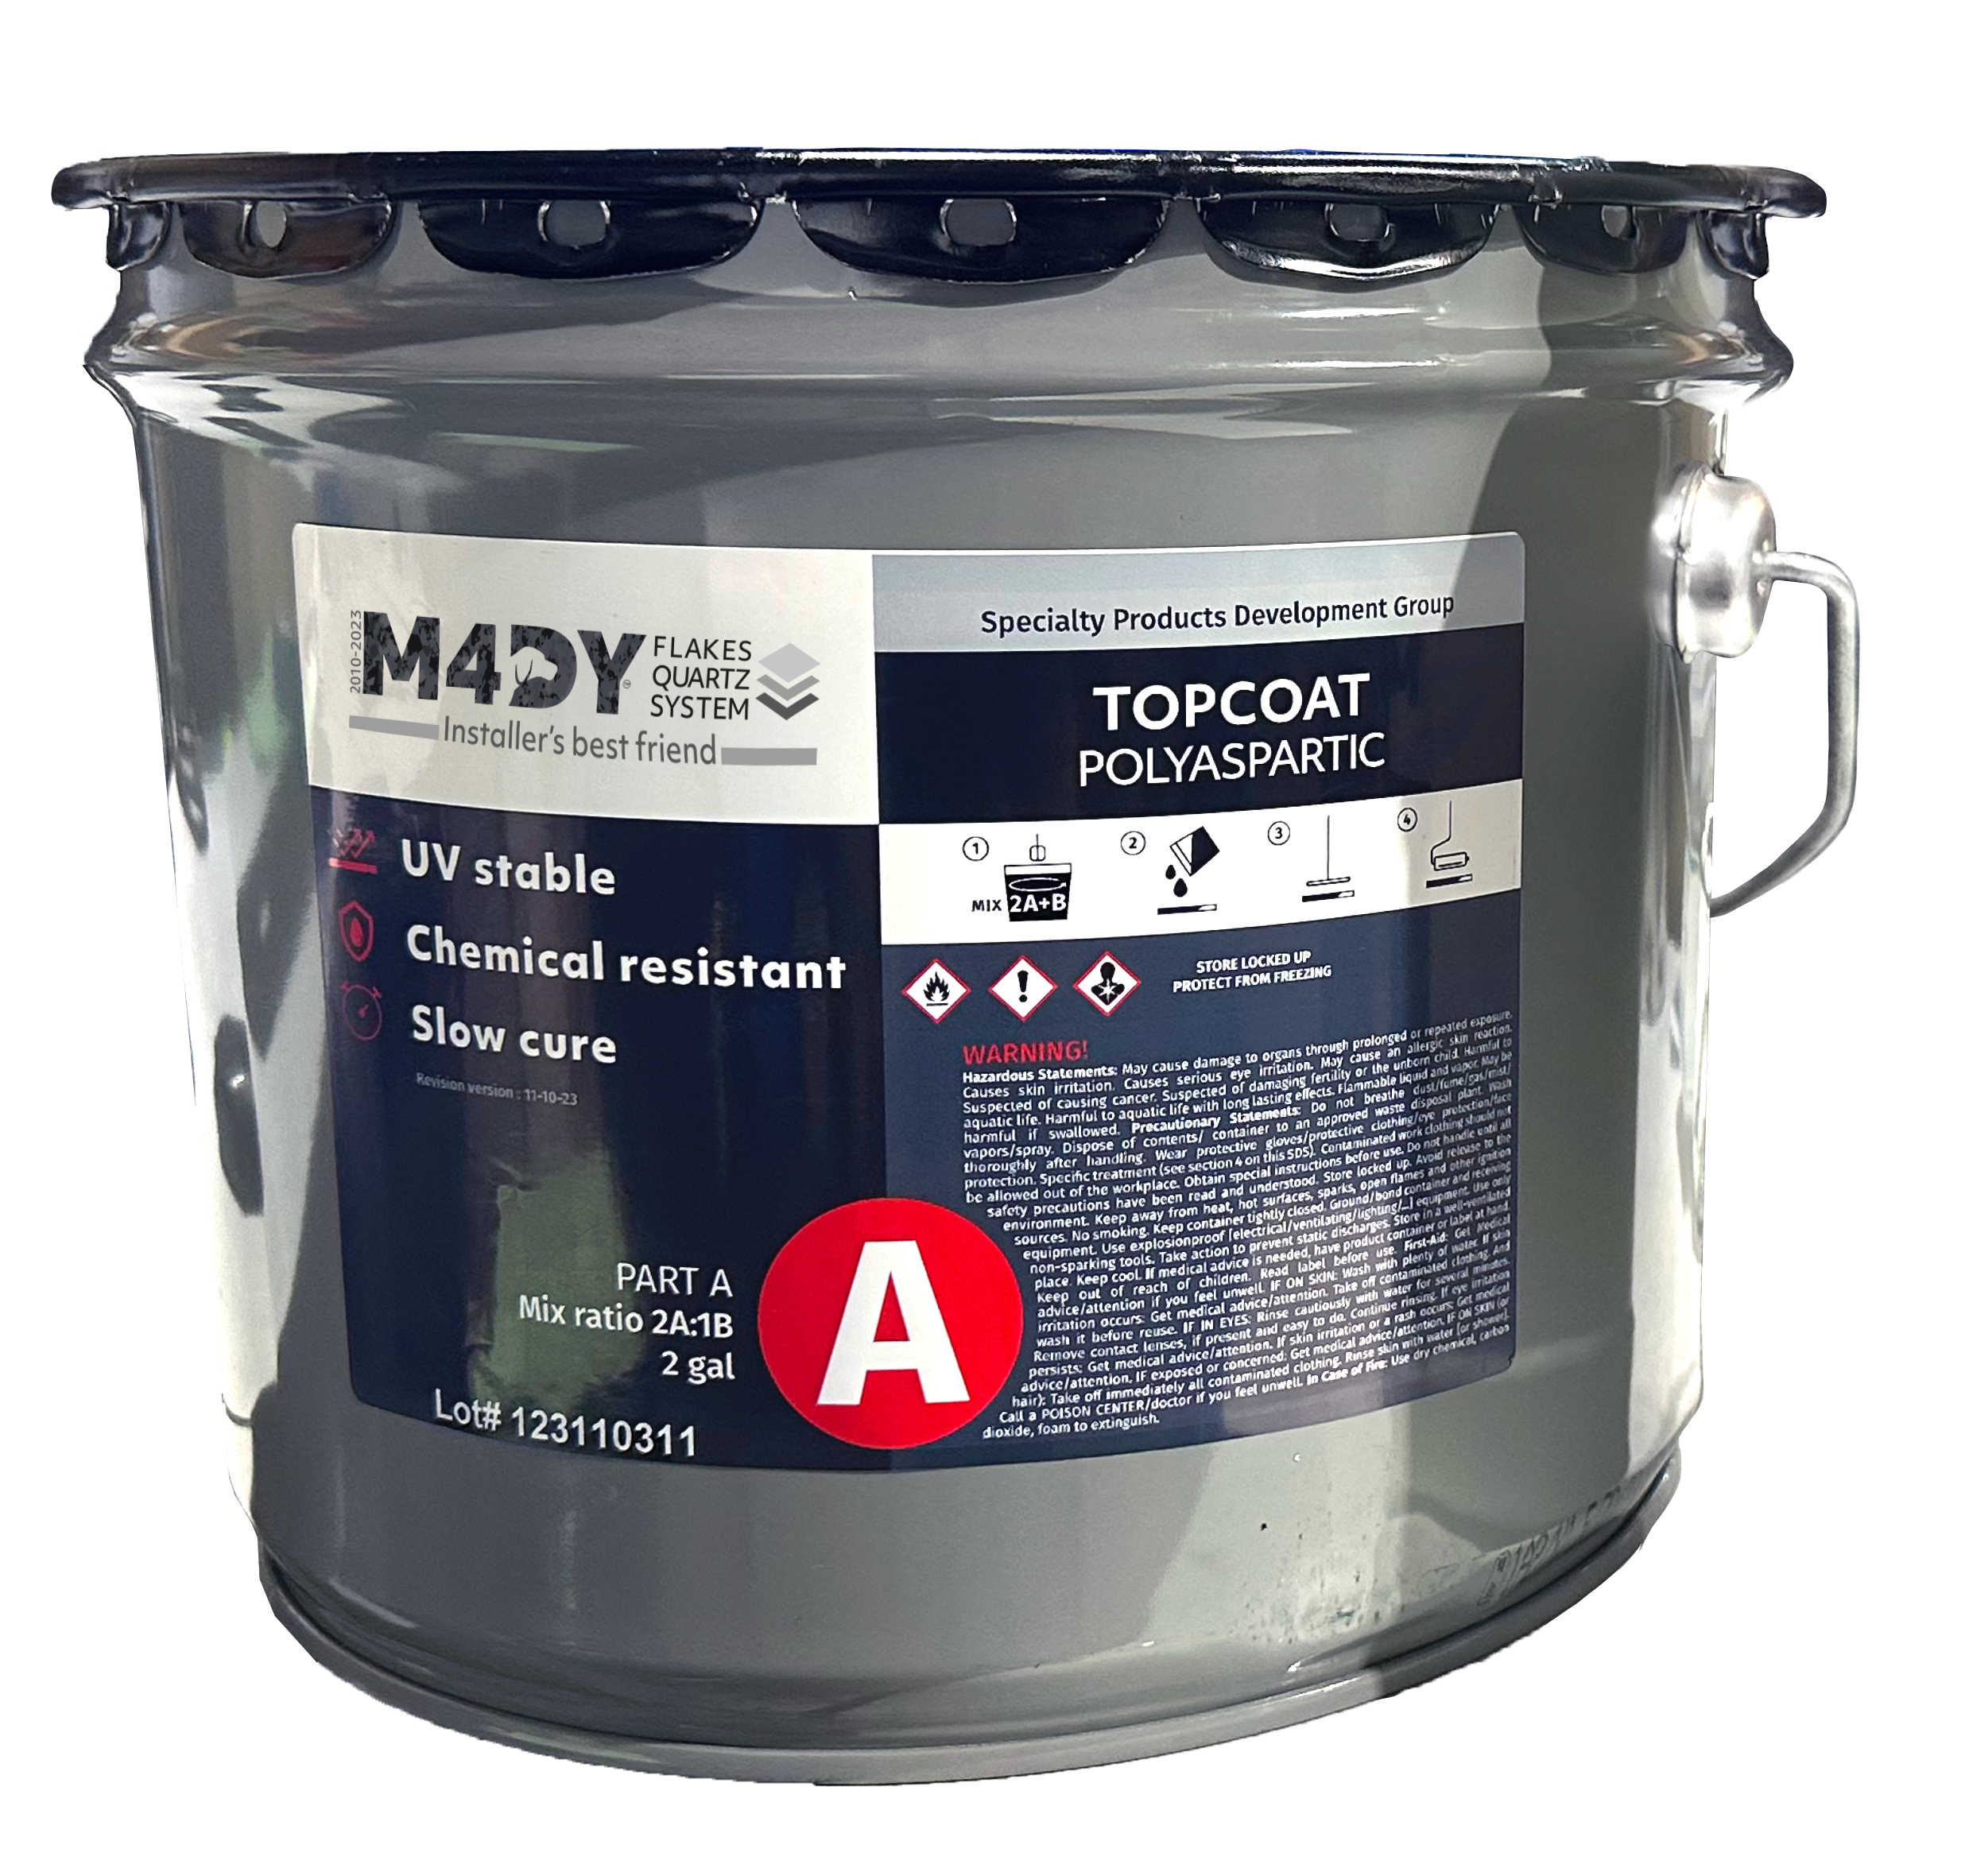 M4DY TOP COAT -Polyaspartic 80 Solids Topcoat 3 GAL - 0